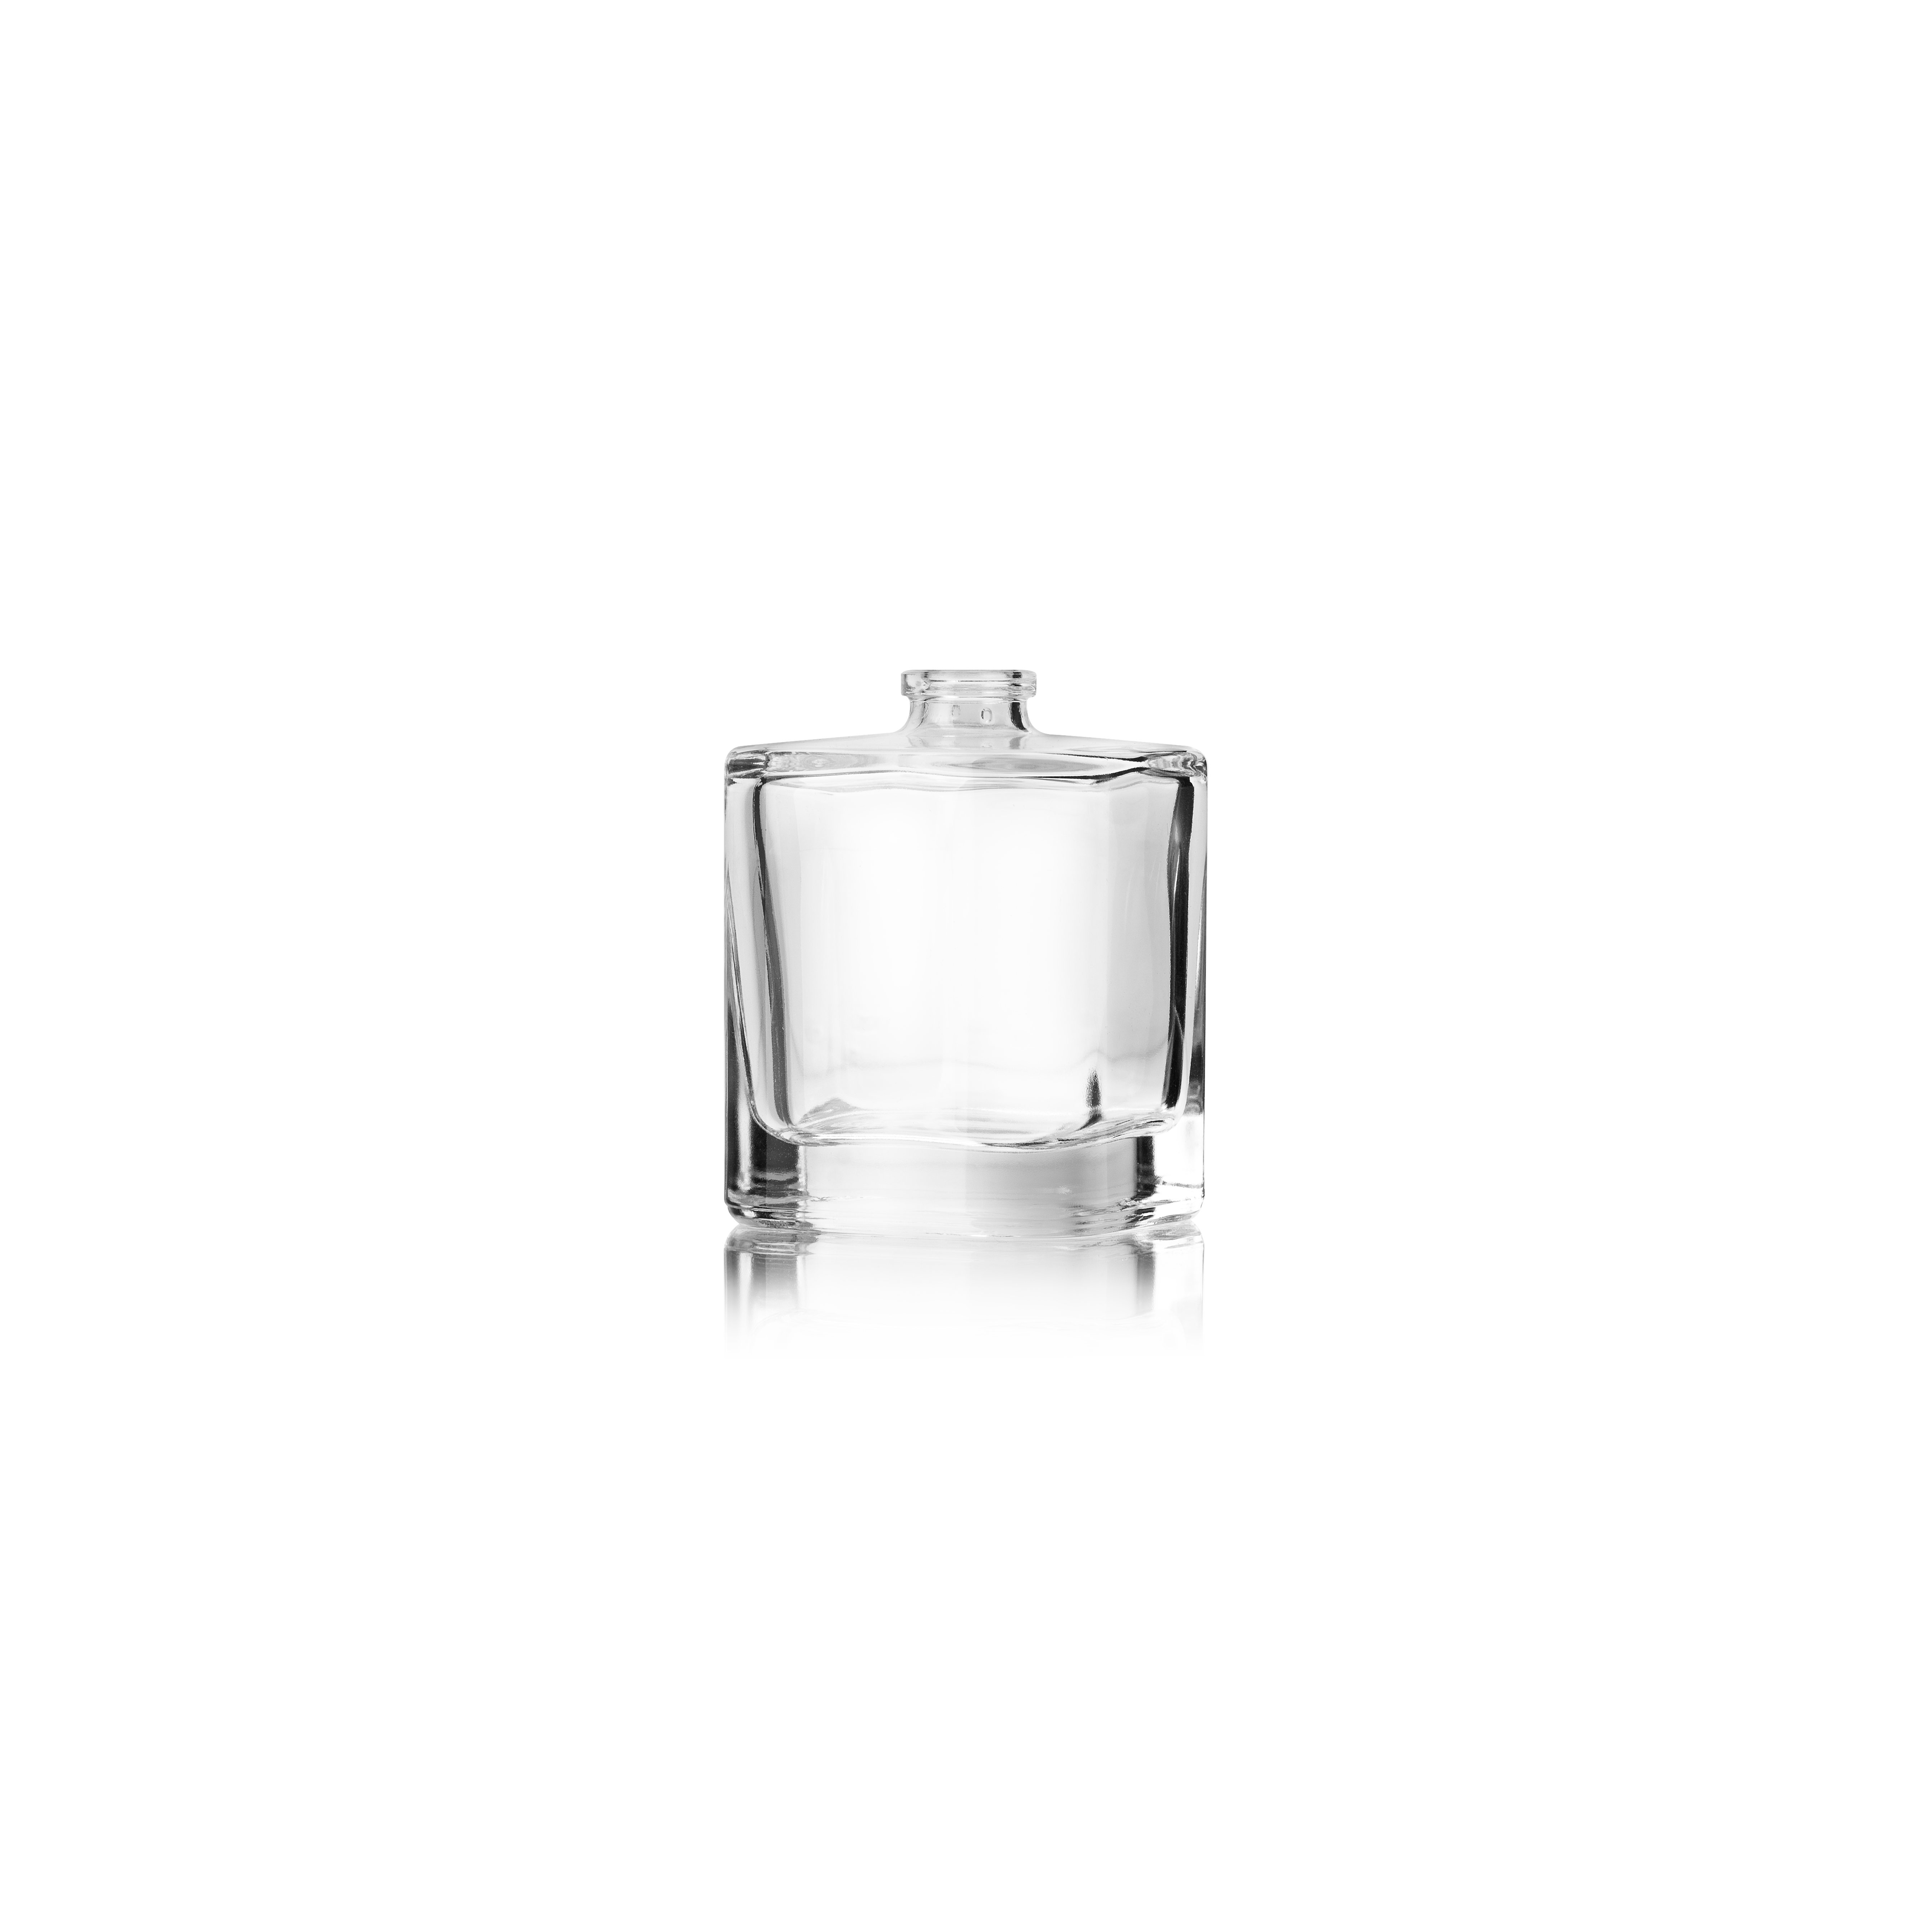 Perfume bottle Azalea 50ml, FEA 15, square, Flint